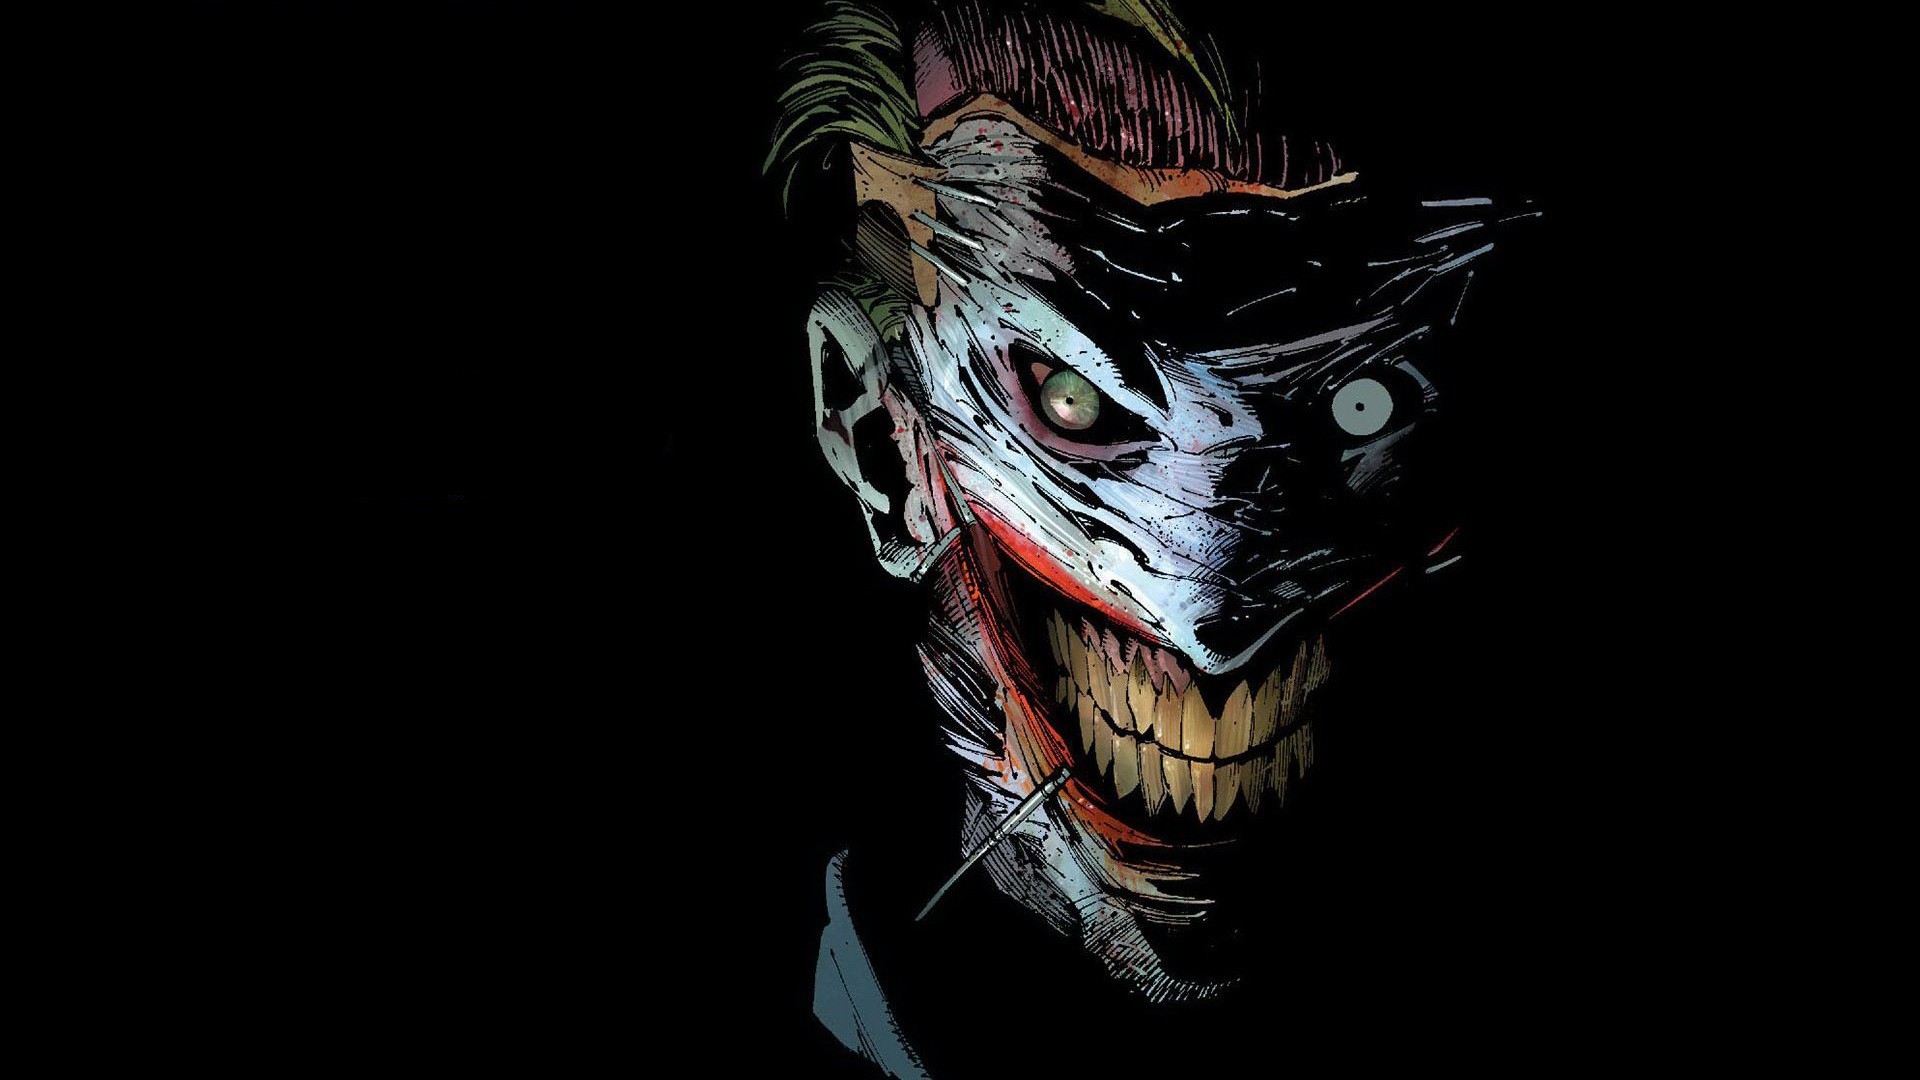 1920x1080 Image - Joker Face-less.jpg | Creepypasta Wiki | FANDOM powered by Wikia